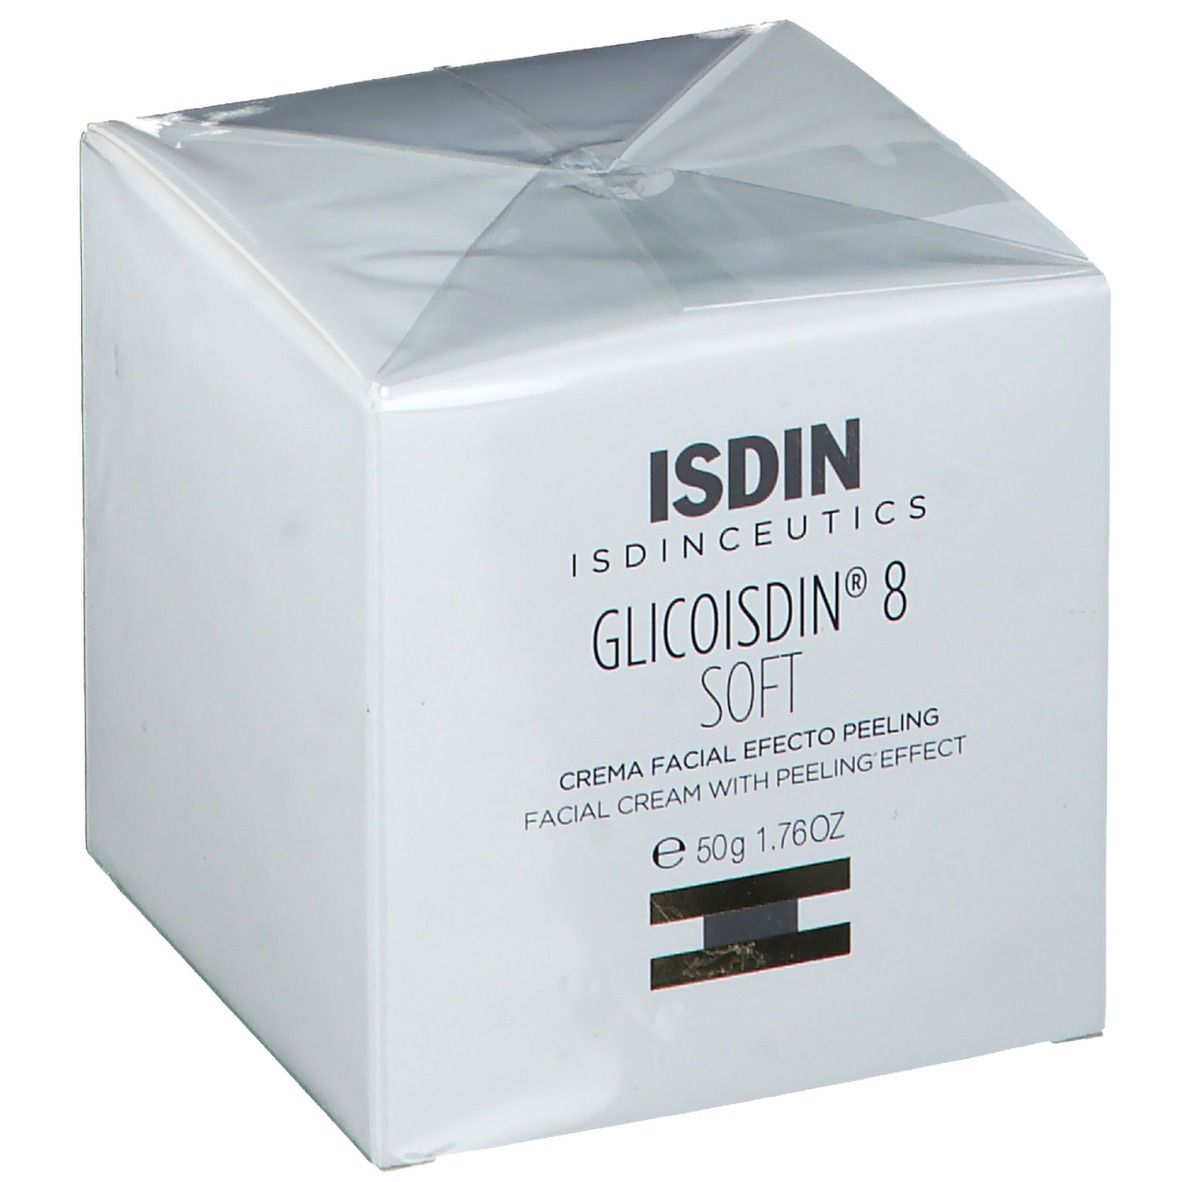 Image of ISDIN ISDINCEUTICS GLICOISDIN 8 SOFT